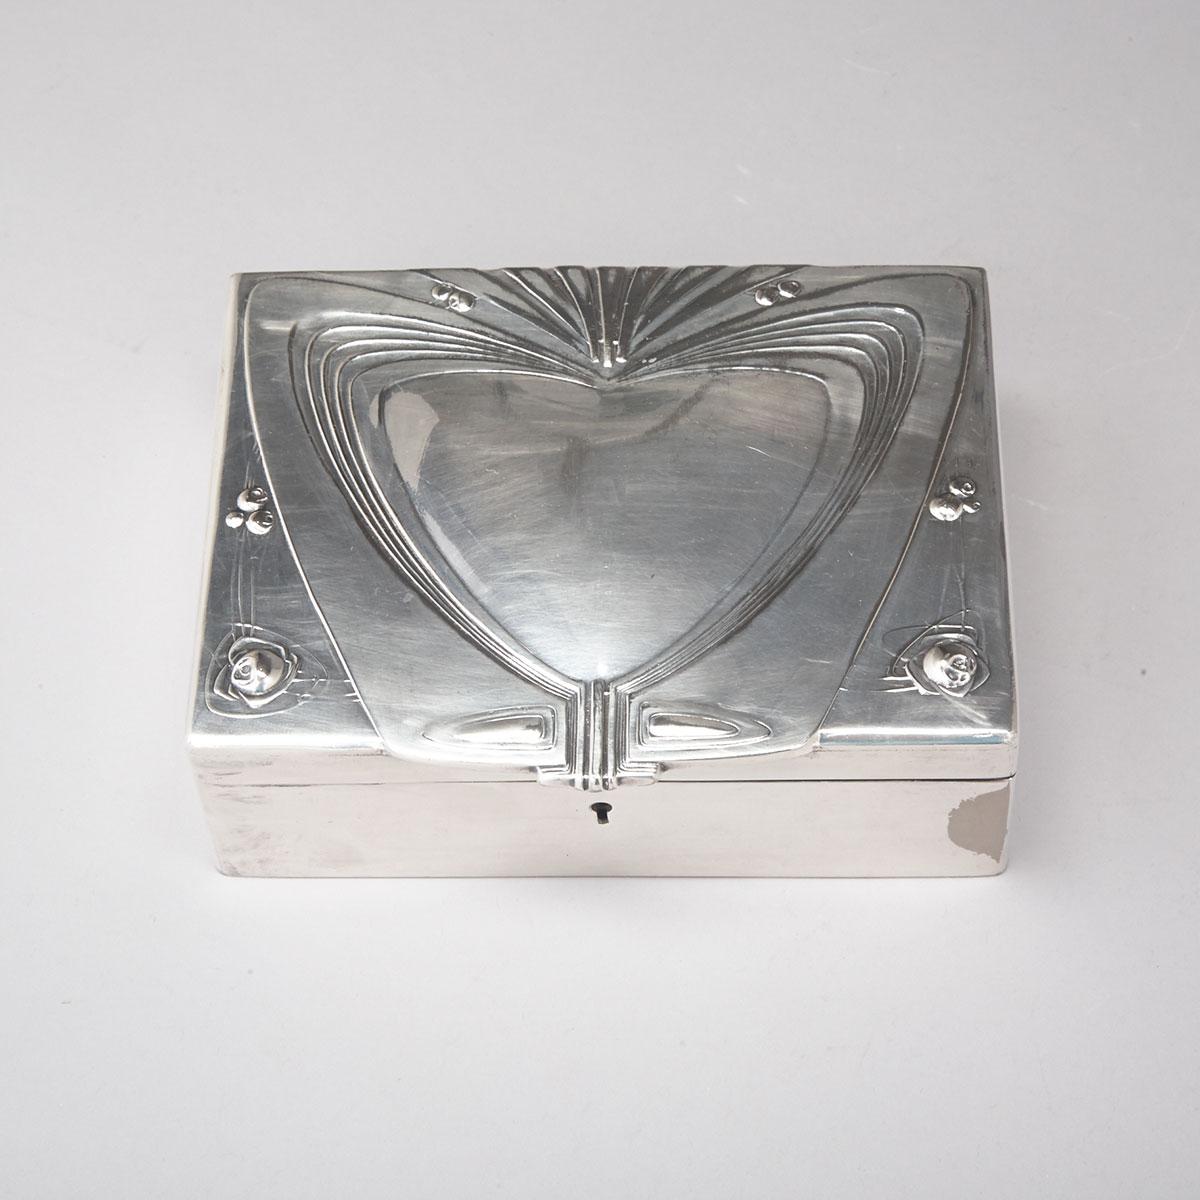 Art Nouveau Silver Plated Rectangular Box, probably German, c.1900-05